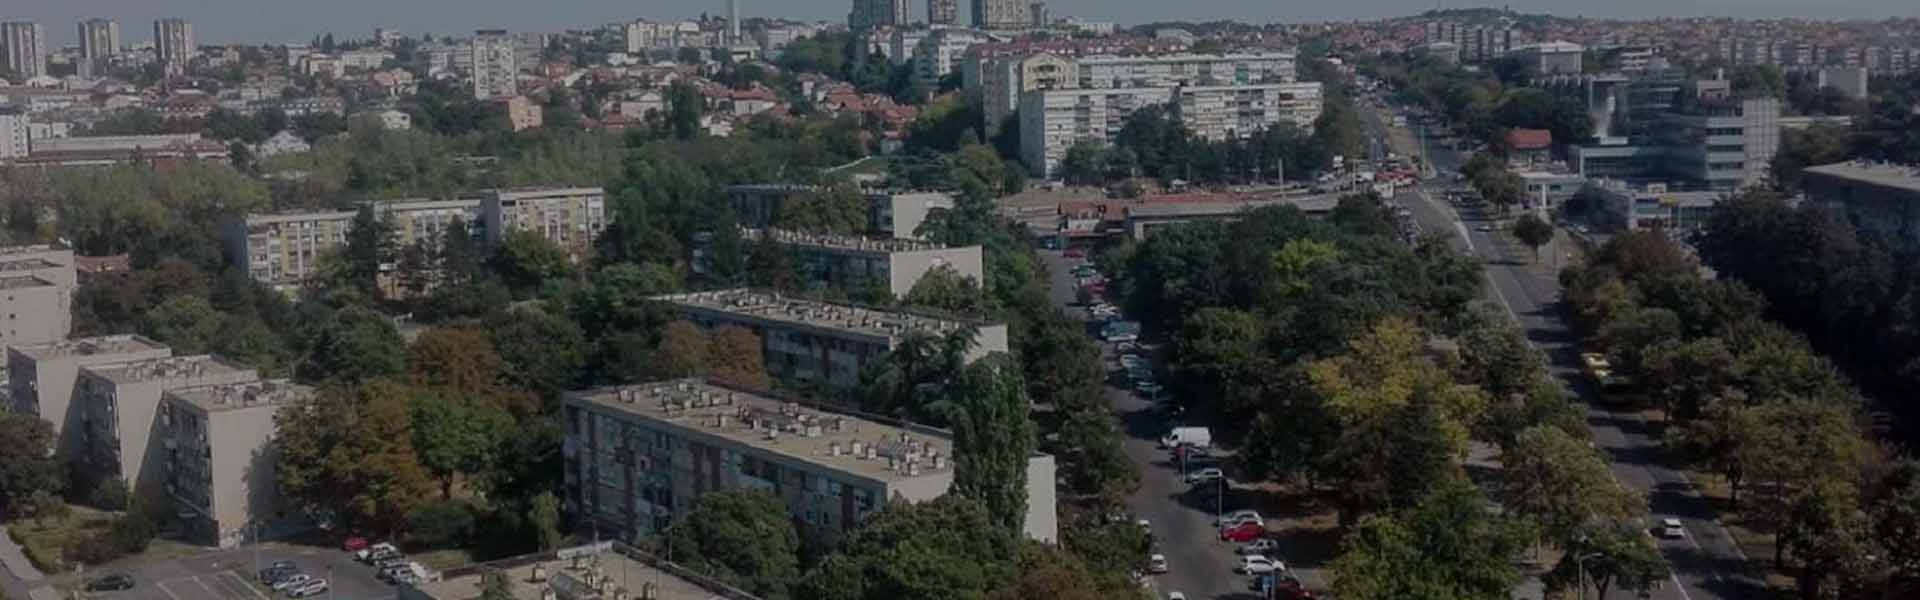 Rent a car Šumice | Beograd, Srbija